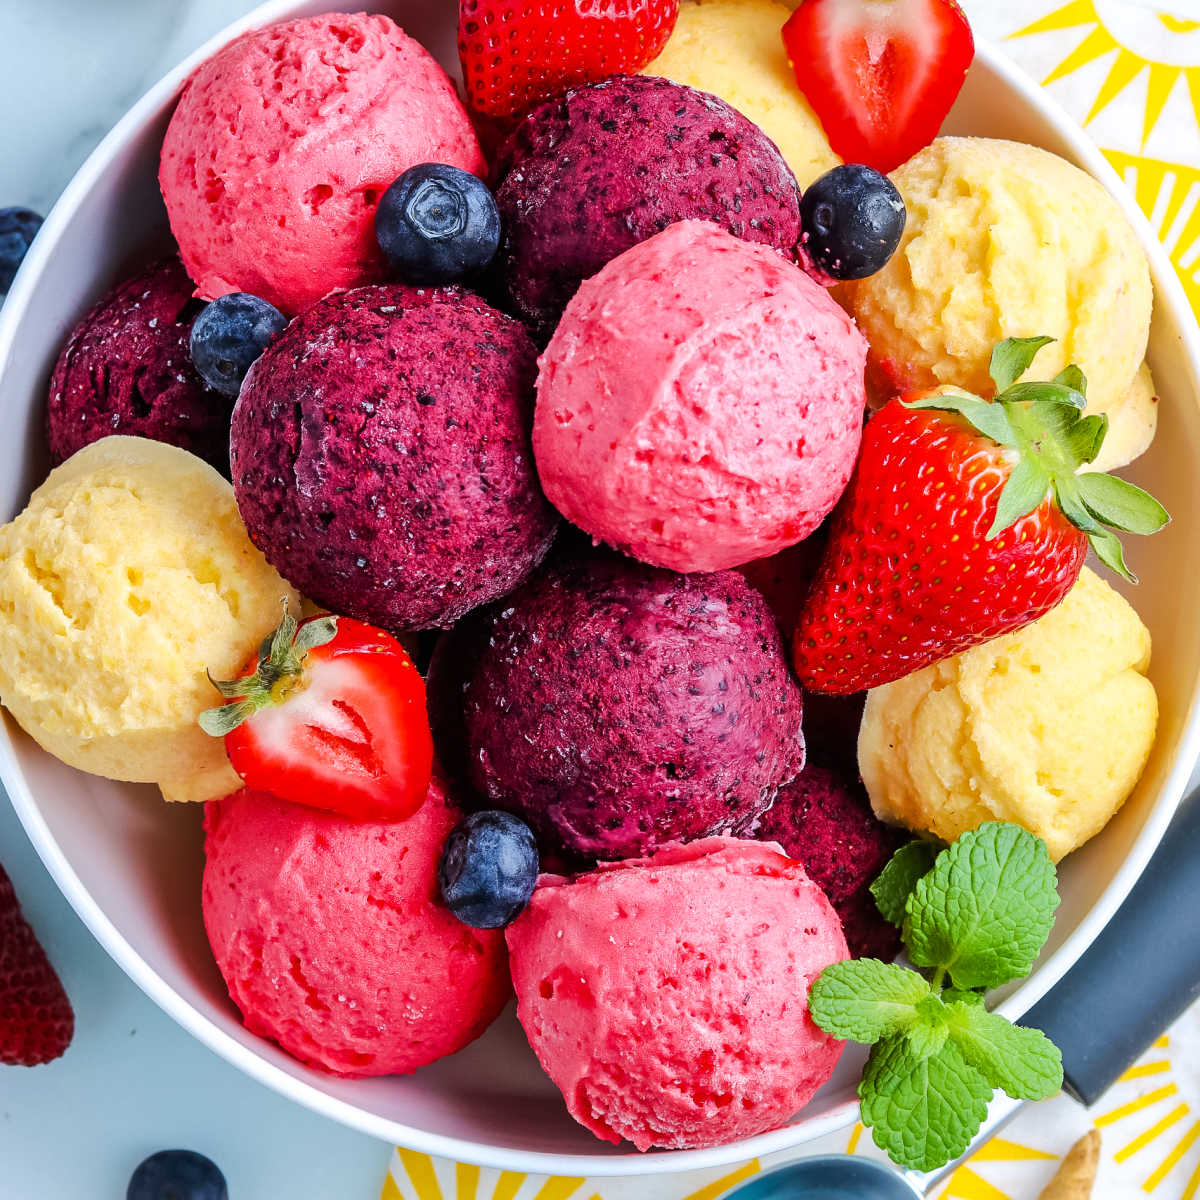 Is Frozen Yogurt Healthier Than Ice Cream? Well, Not Really